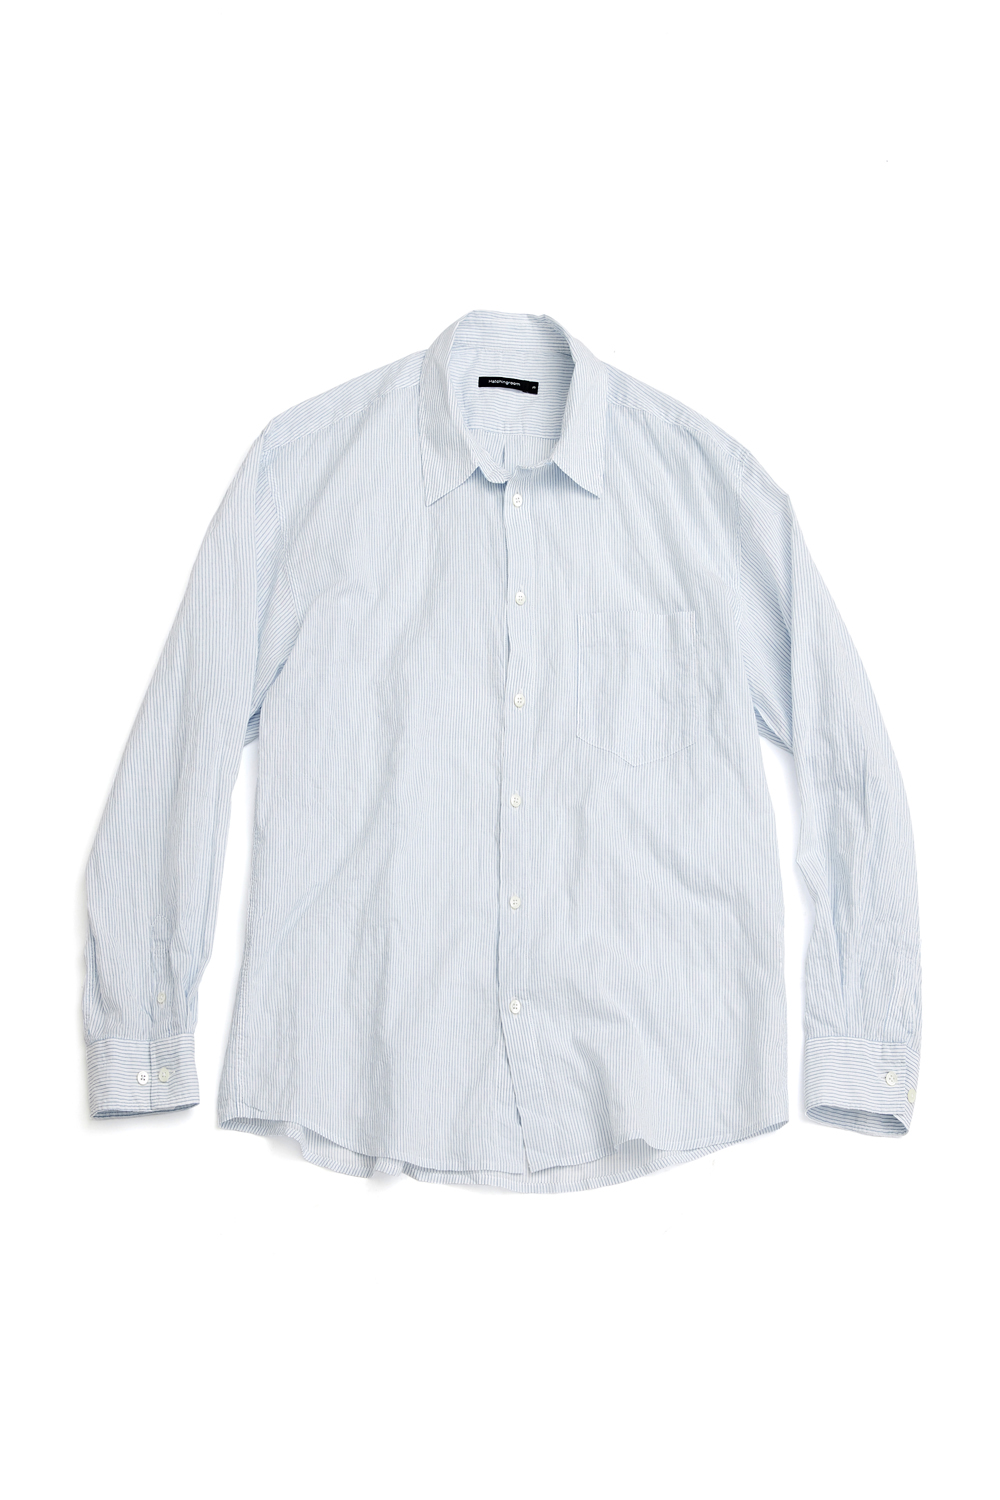 Classic Shirt Crinkle Stripe White/Blue